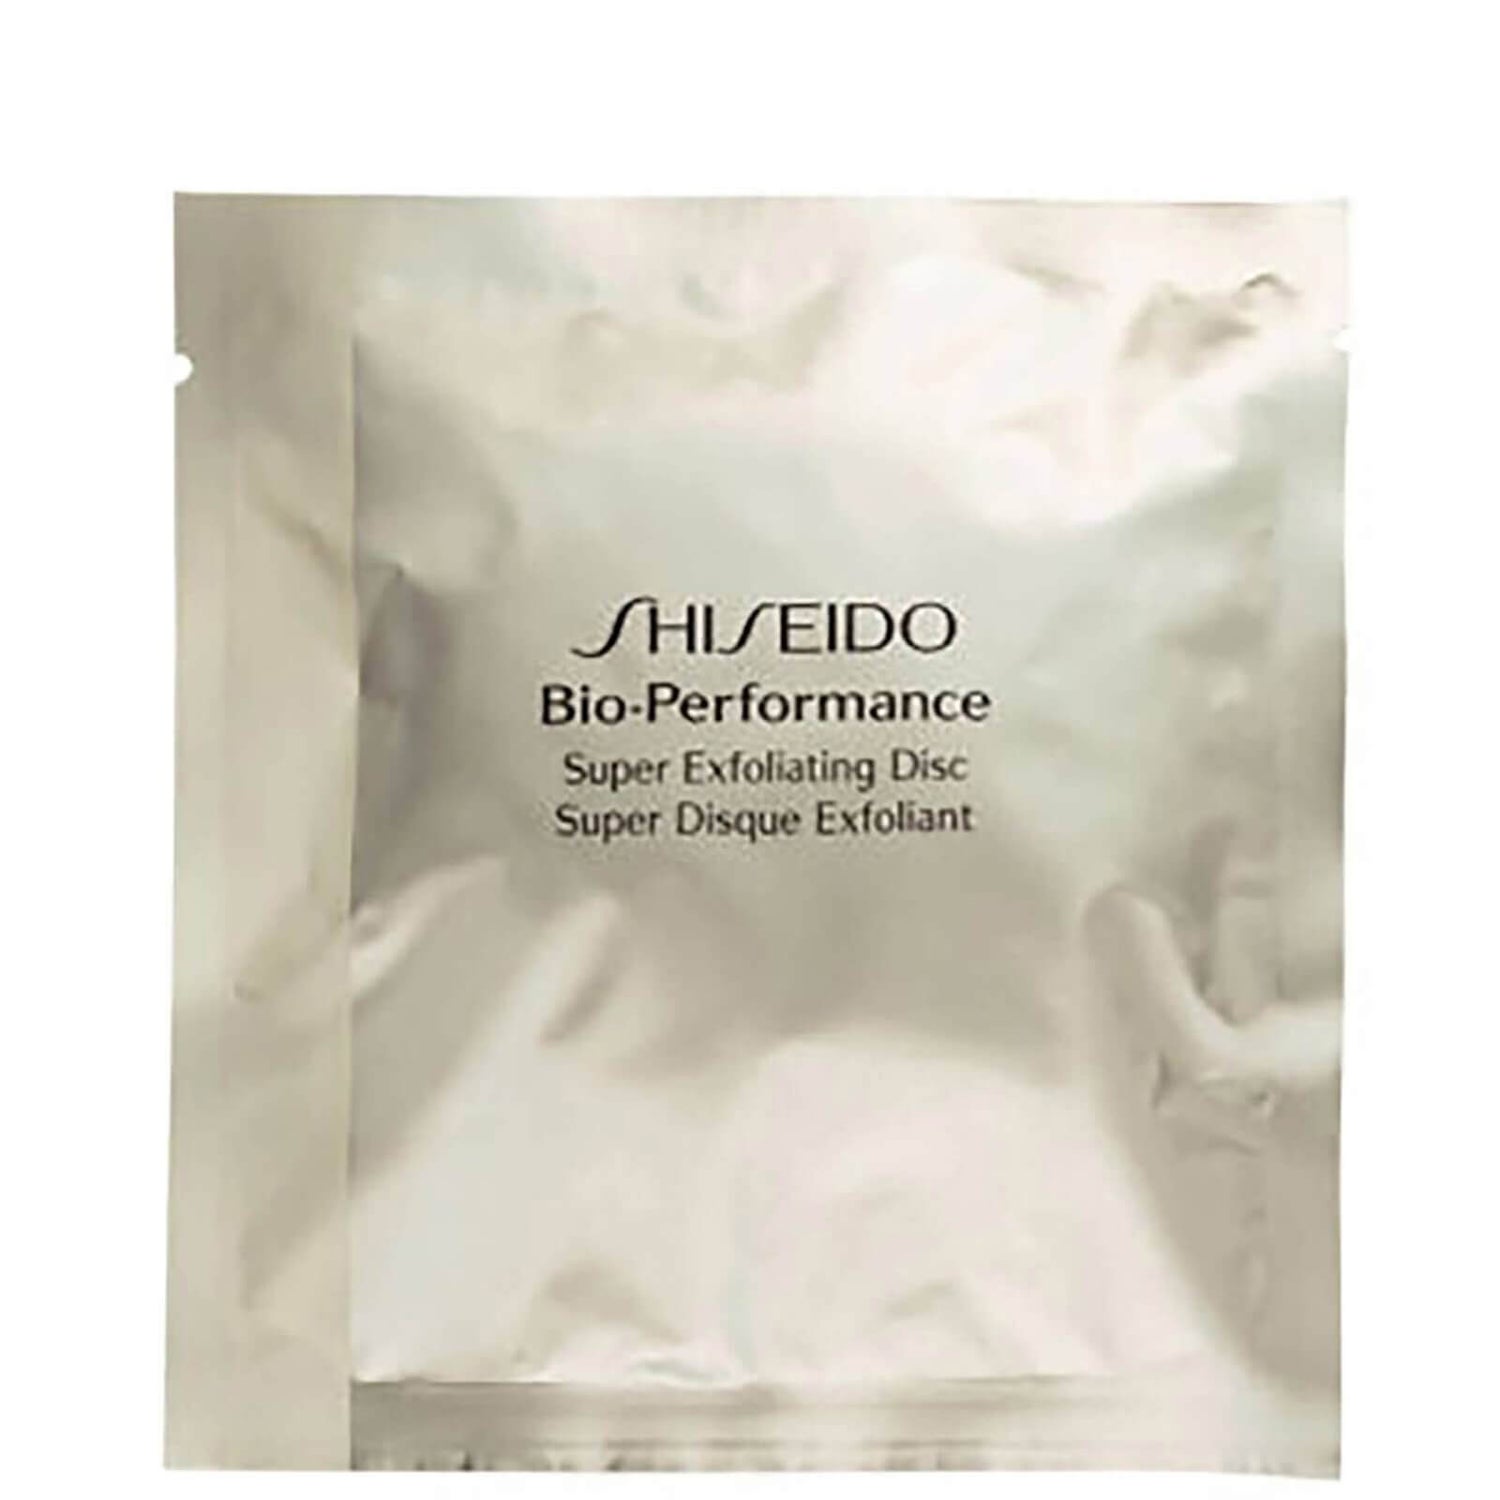 BioPerformance Super Exfoliating Discs de Shiseido x 8